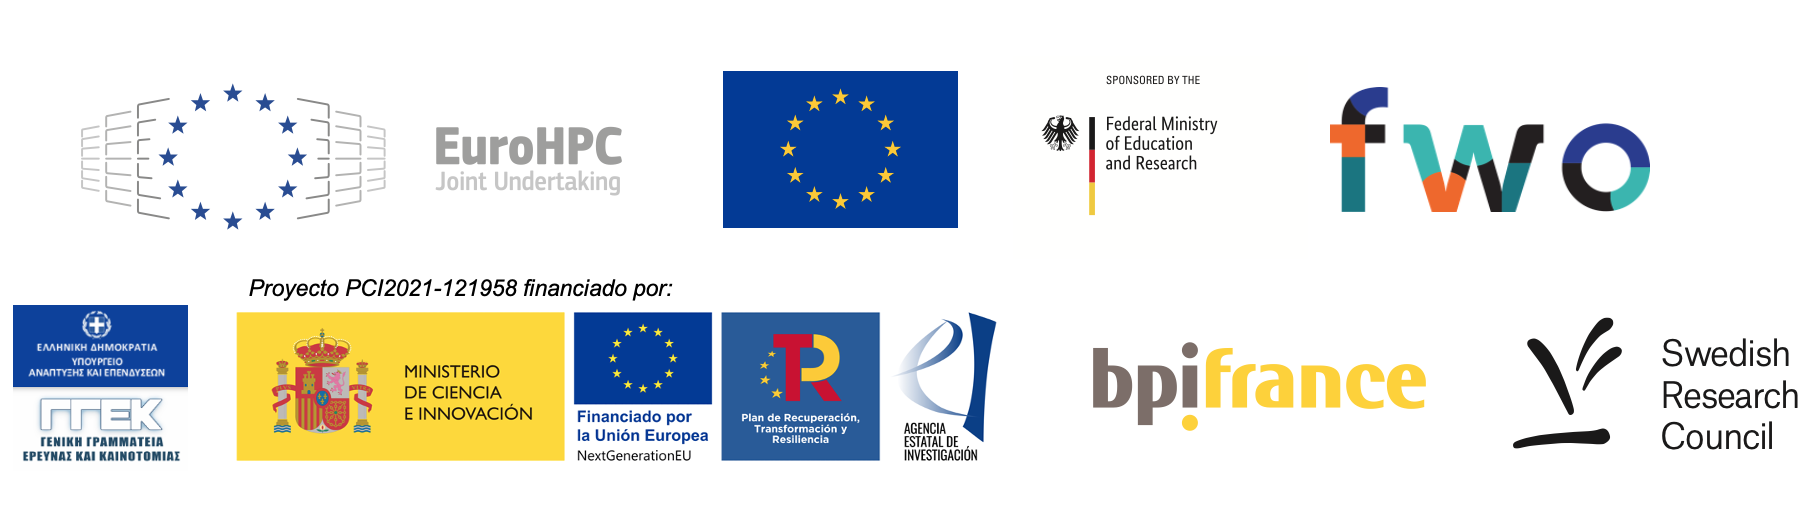 Logos of the funding agencies